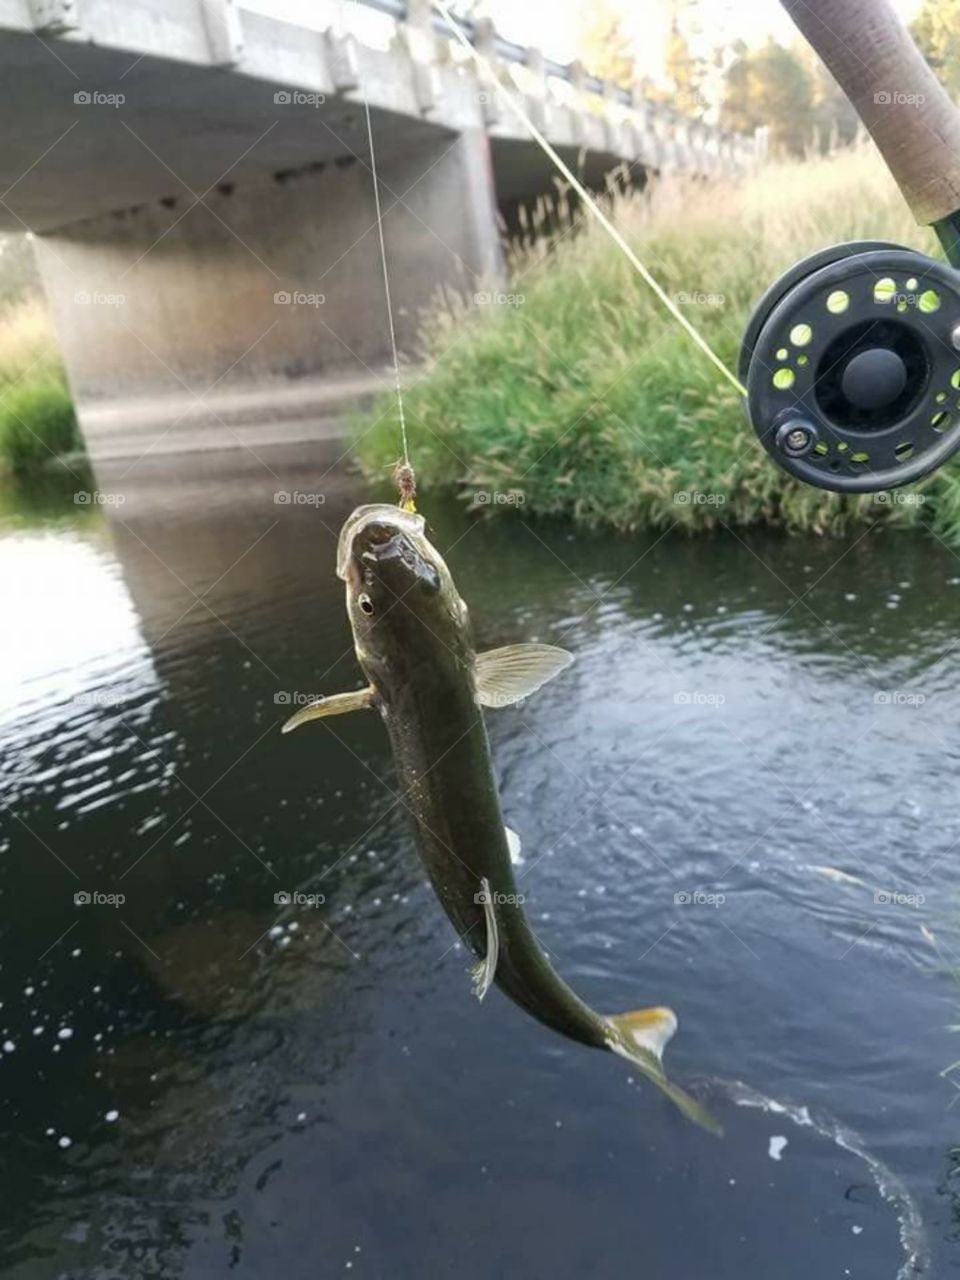 caught one